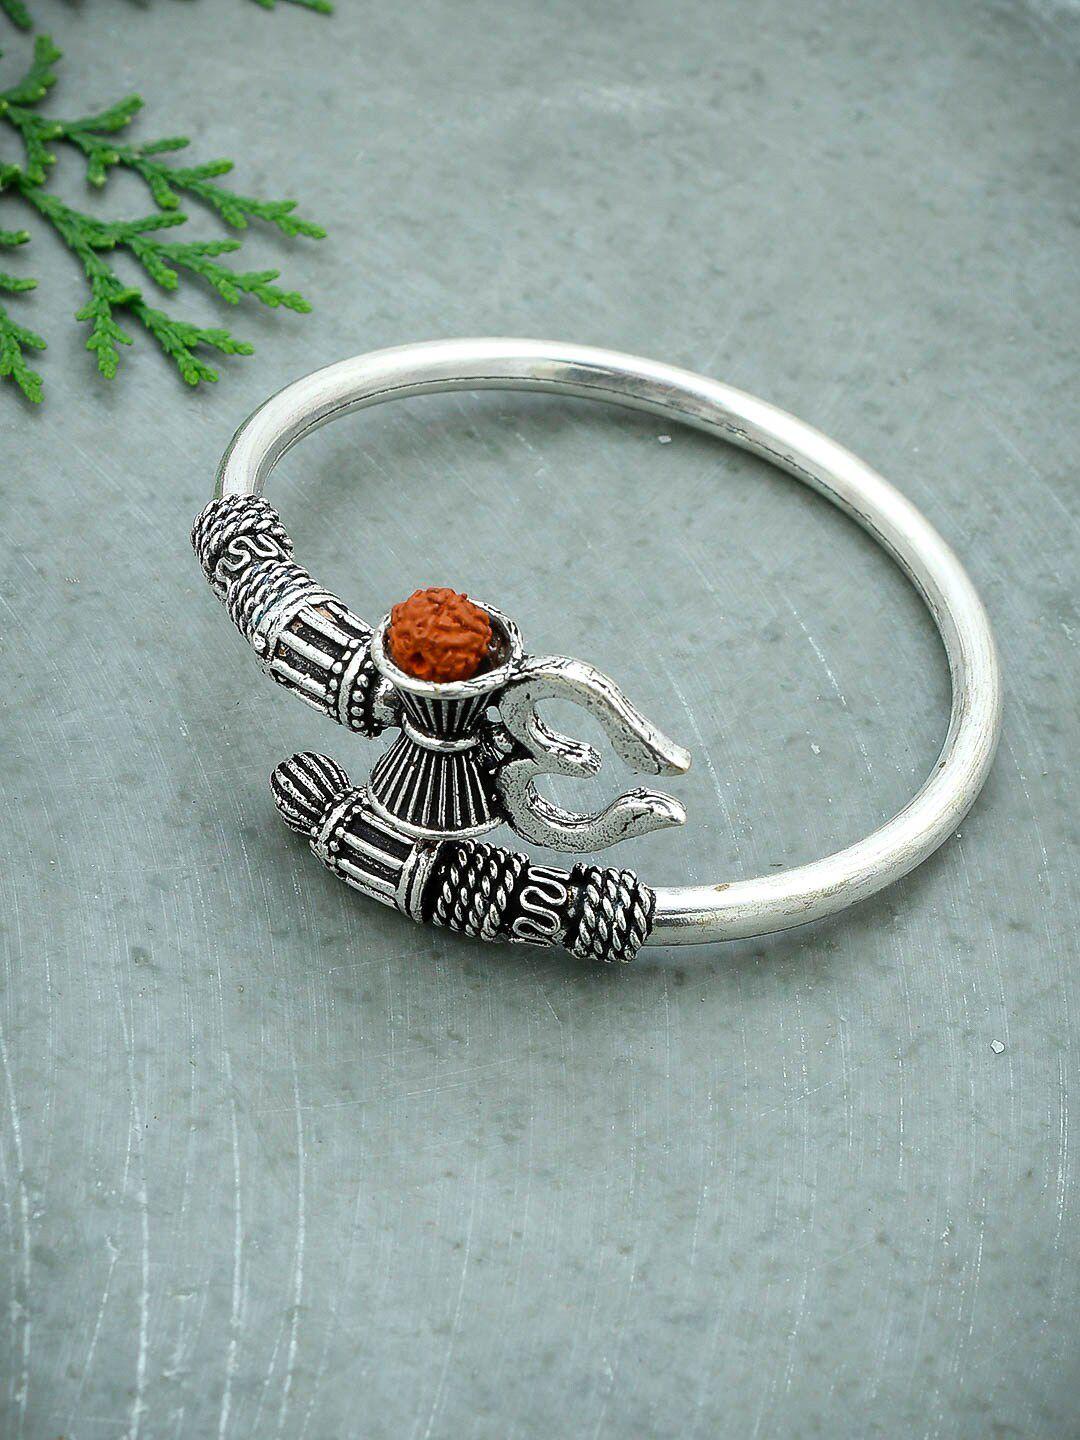 silvermerc designs oxidized silver-plated temple cuff bracelet